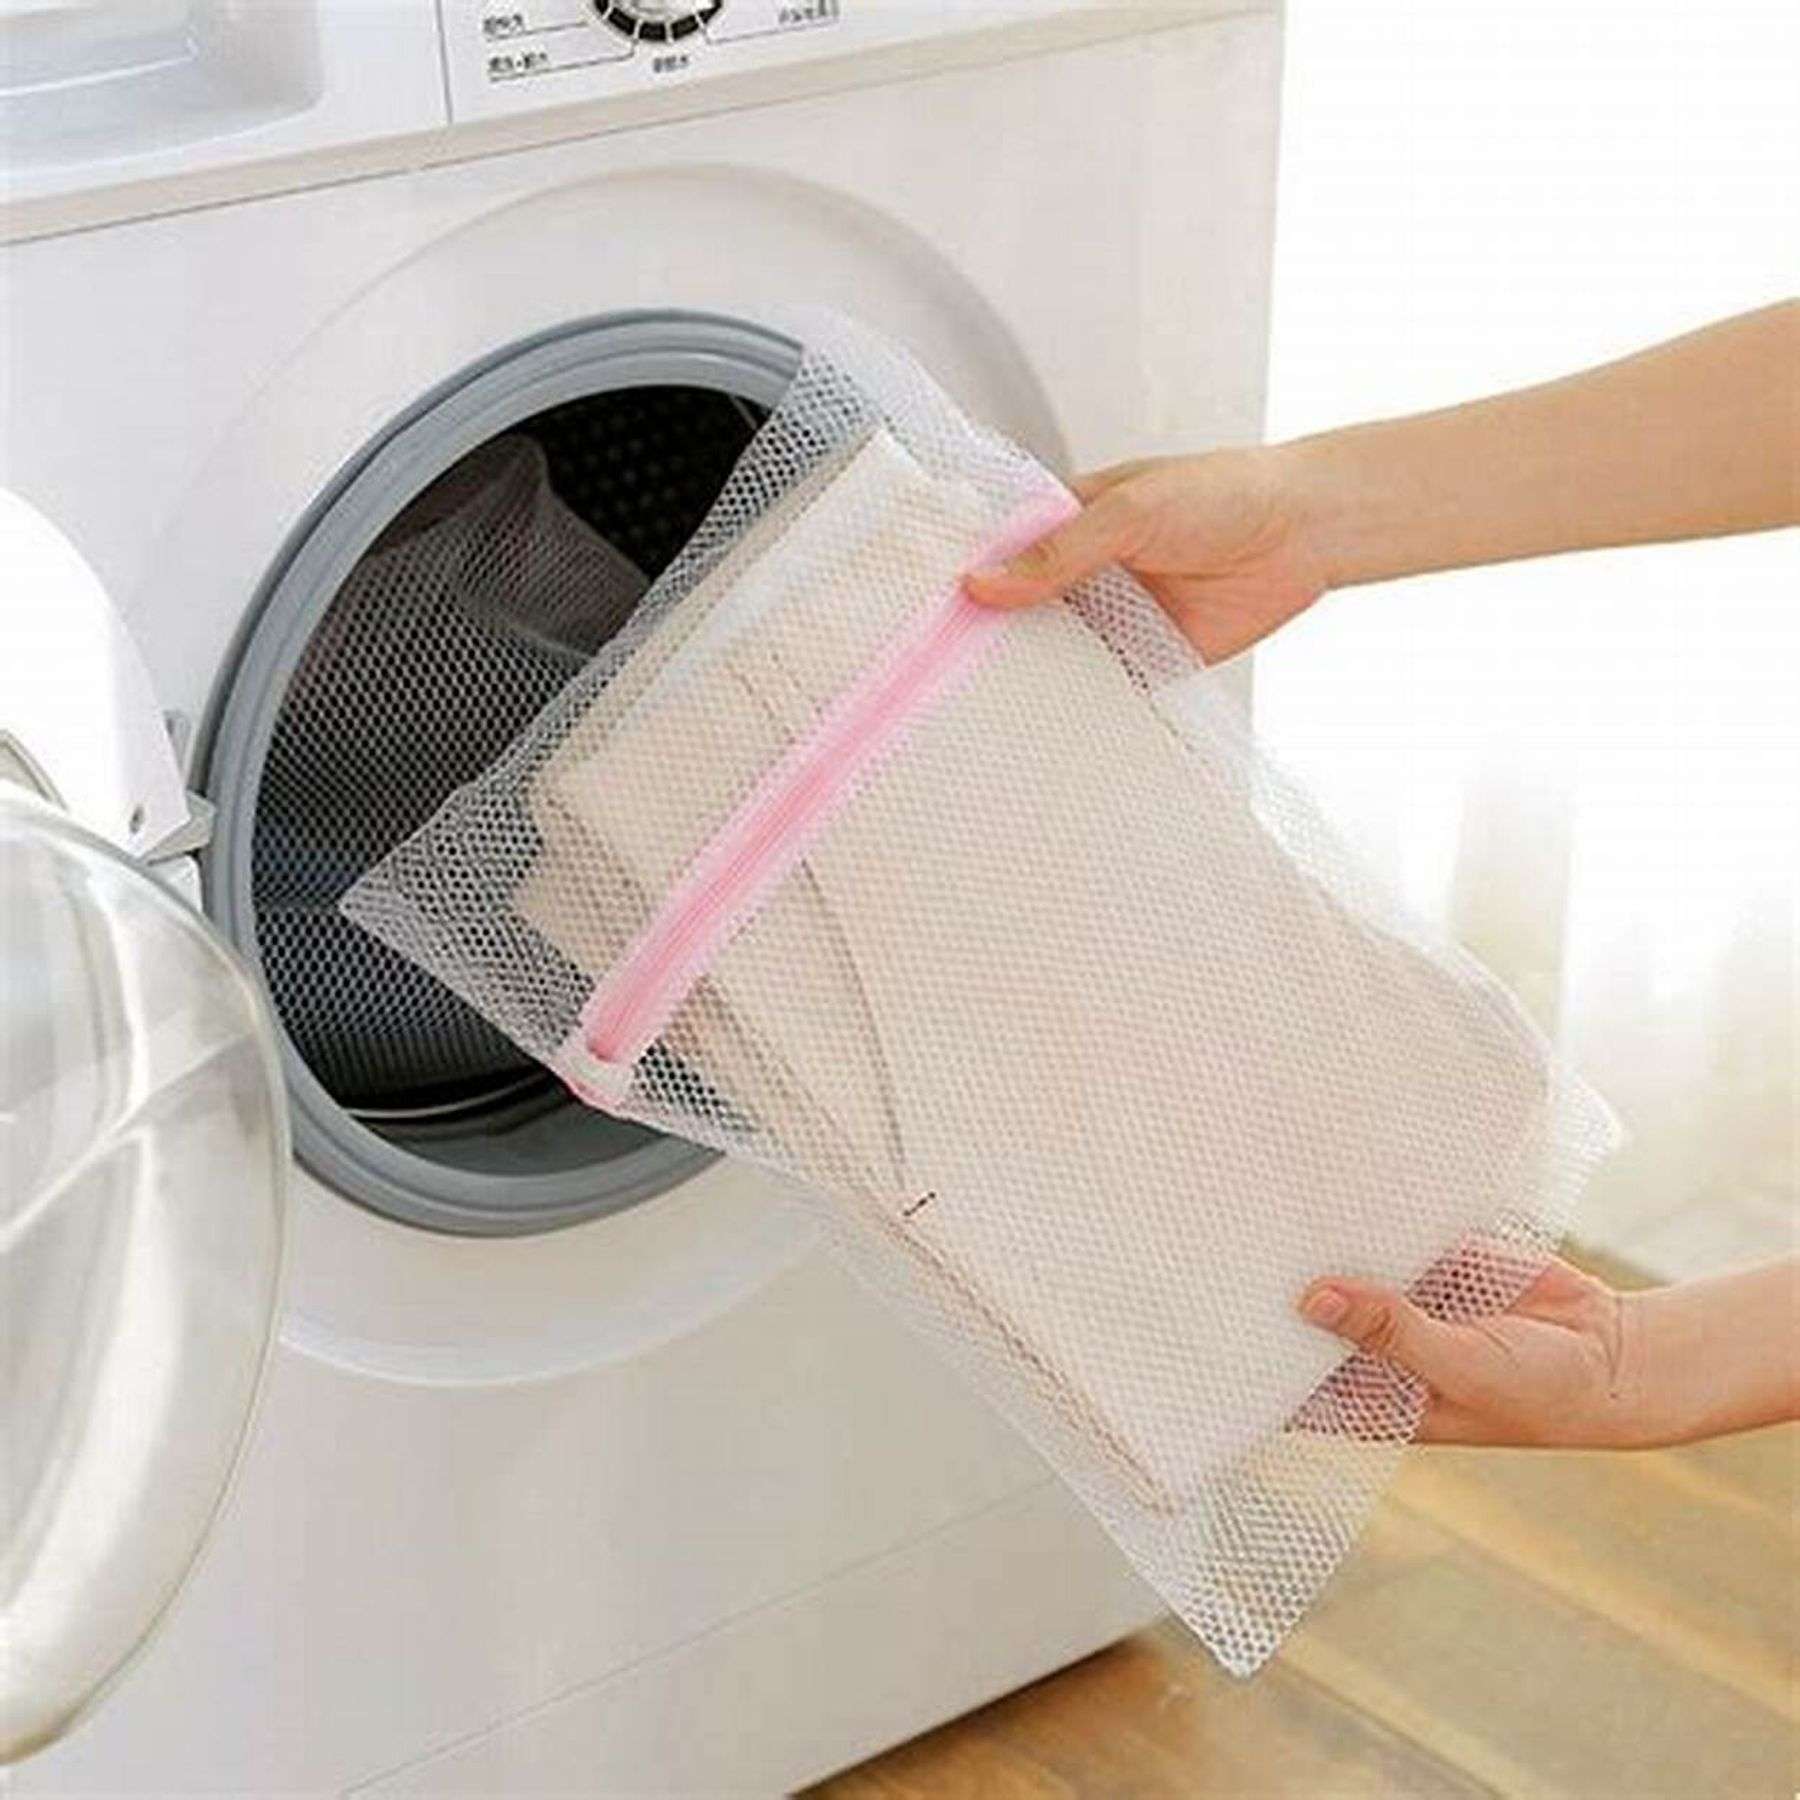 Cho quần áo vào túi giặt đồ - giặt quần áo bằng máy giặt